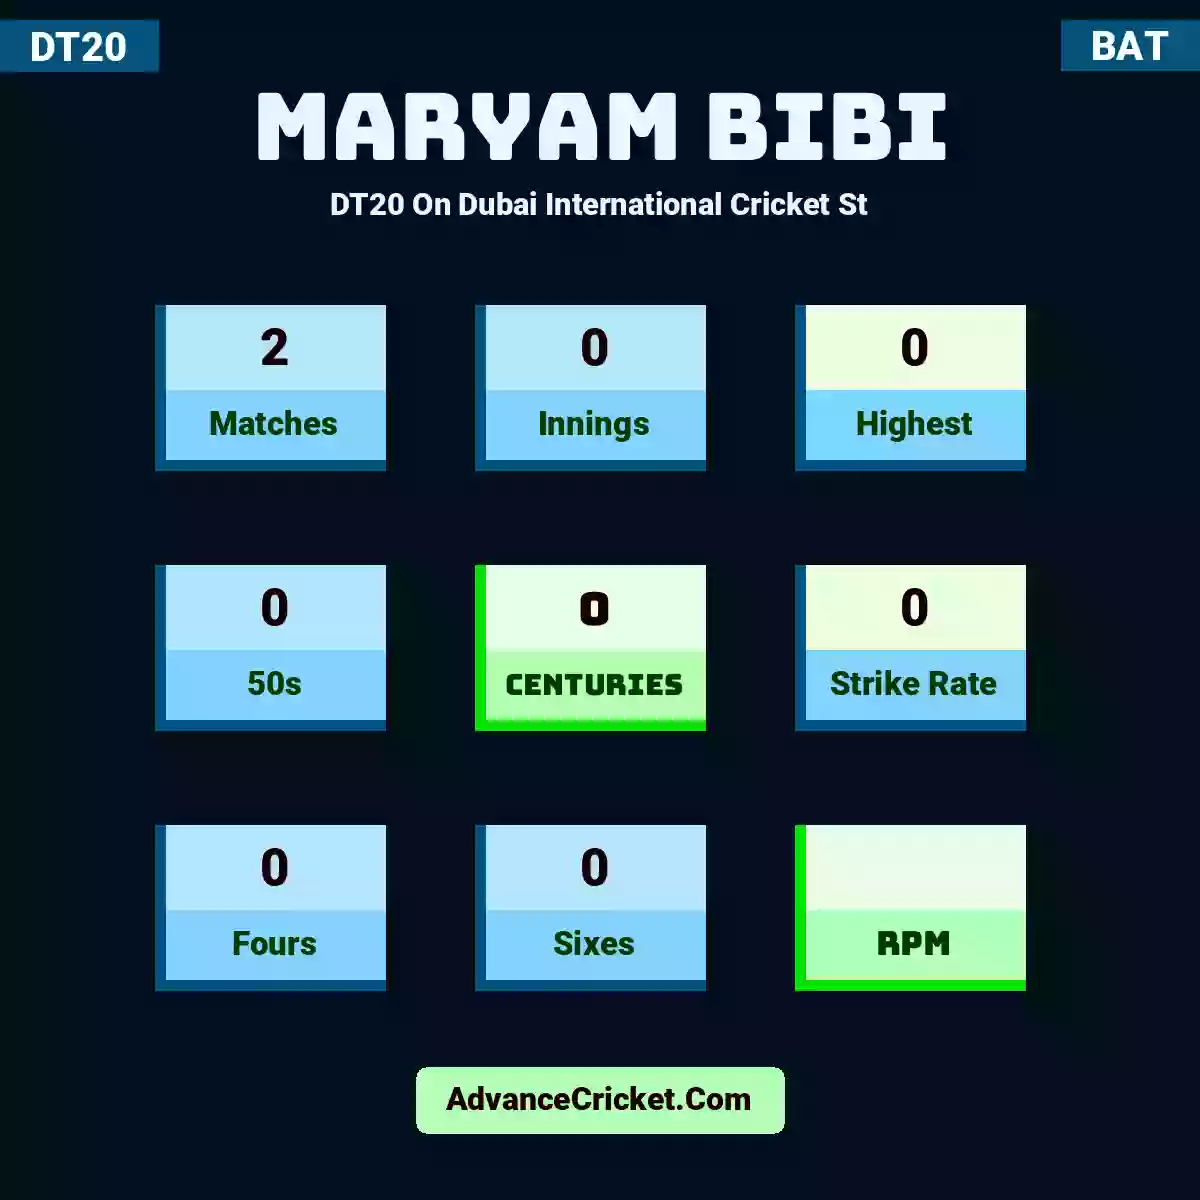 Maryam Bibi DT20  On Dubai International Cricket St, Maryam Bibi played 2 matches, scored 0 runs as highest, 0 half-centuries, and 0 centuries, with a strike rate of 0. M.Bibi hit 0 fours and 0 sixes.